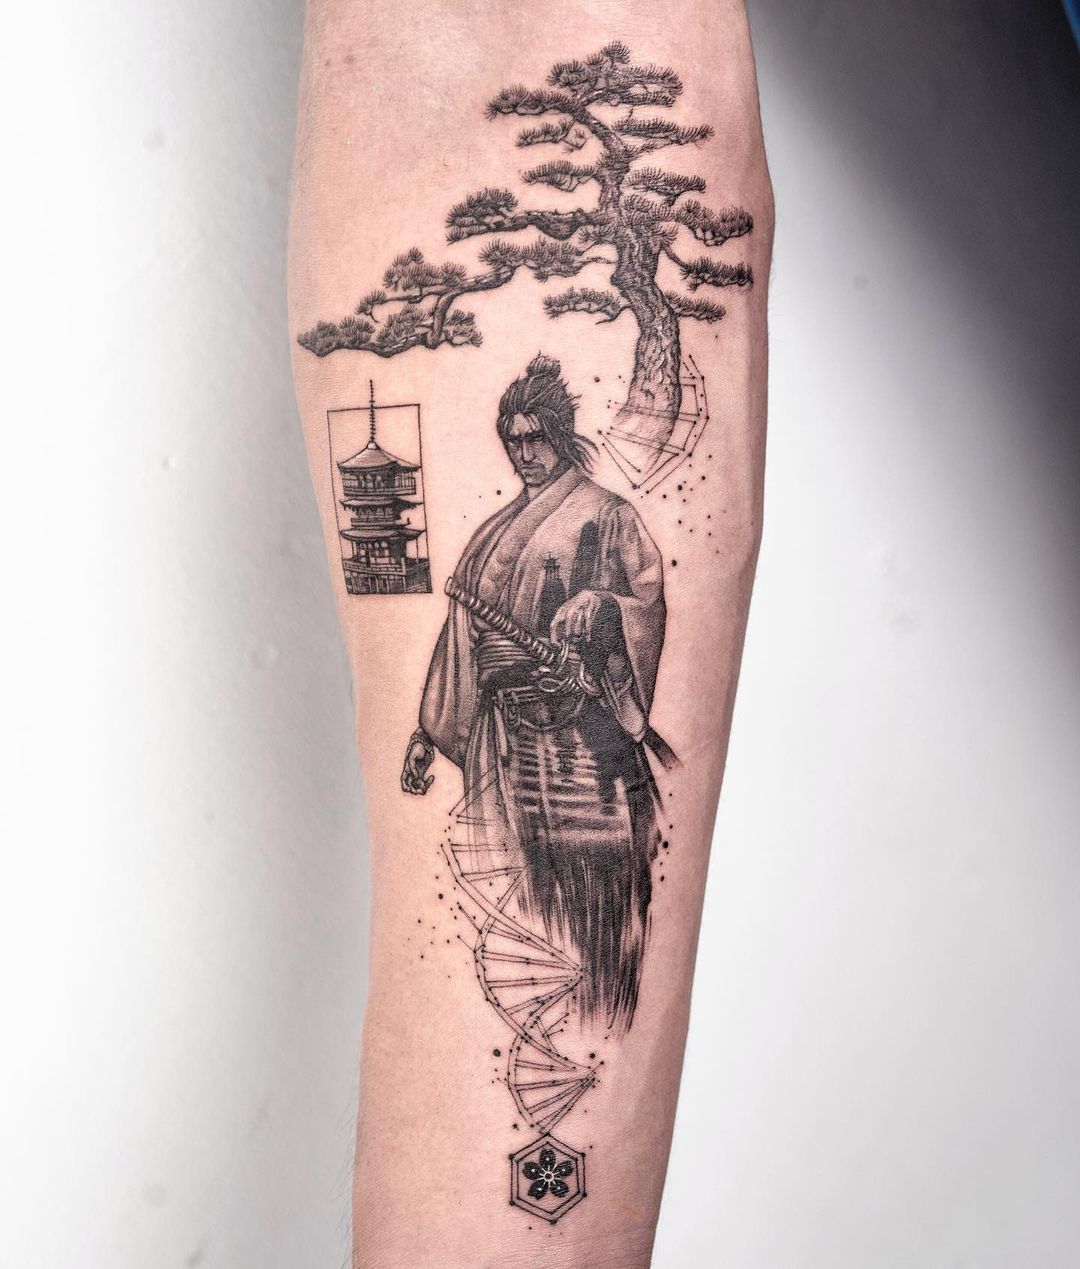 A hyper-realistic tattoo design of a samurai warrior | Stable Diffusion